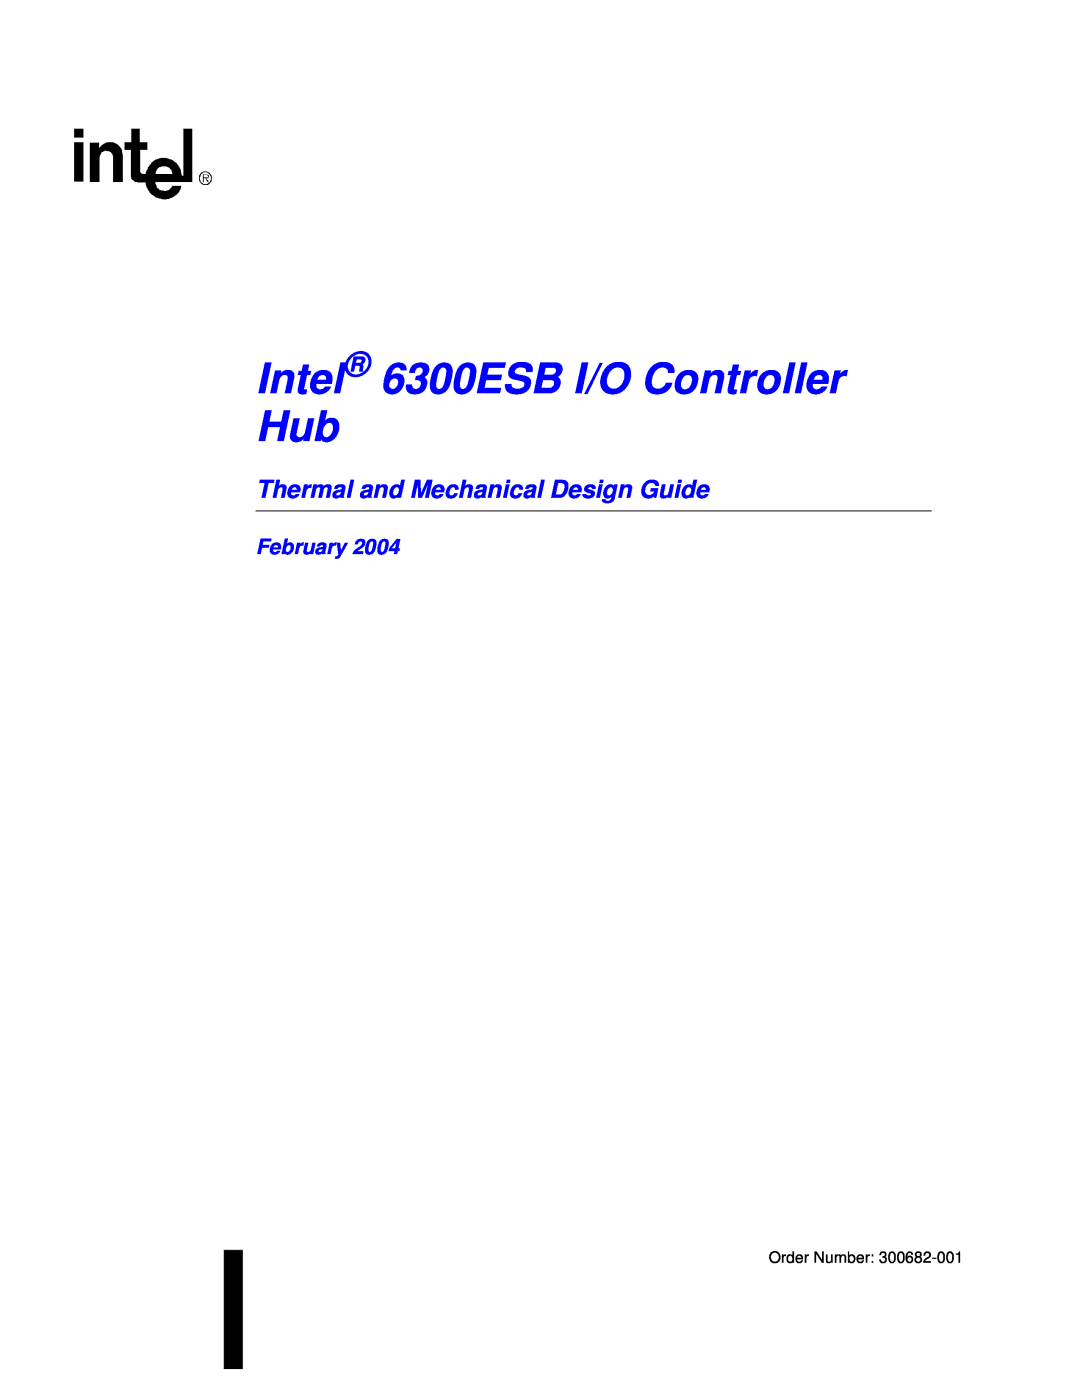 Intel manual Intel 6300ESB I/O Controller Hub, Thermal and Mechanical Design Guide, February 